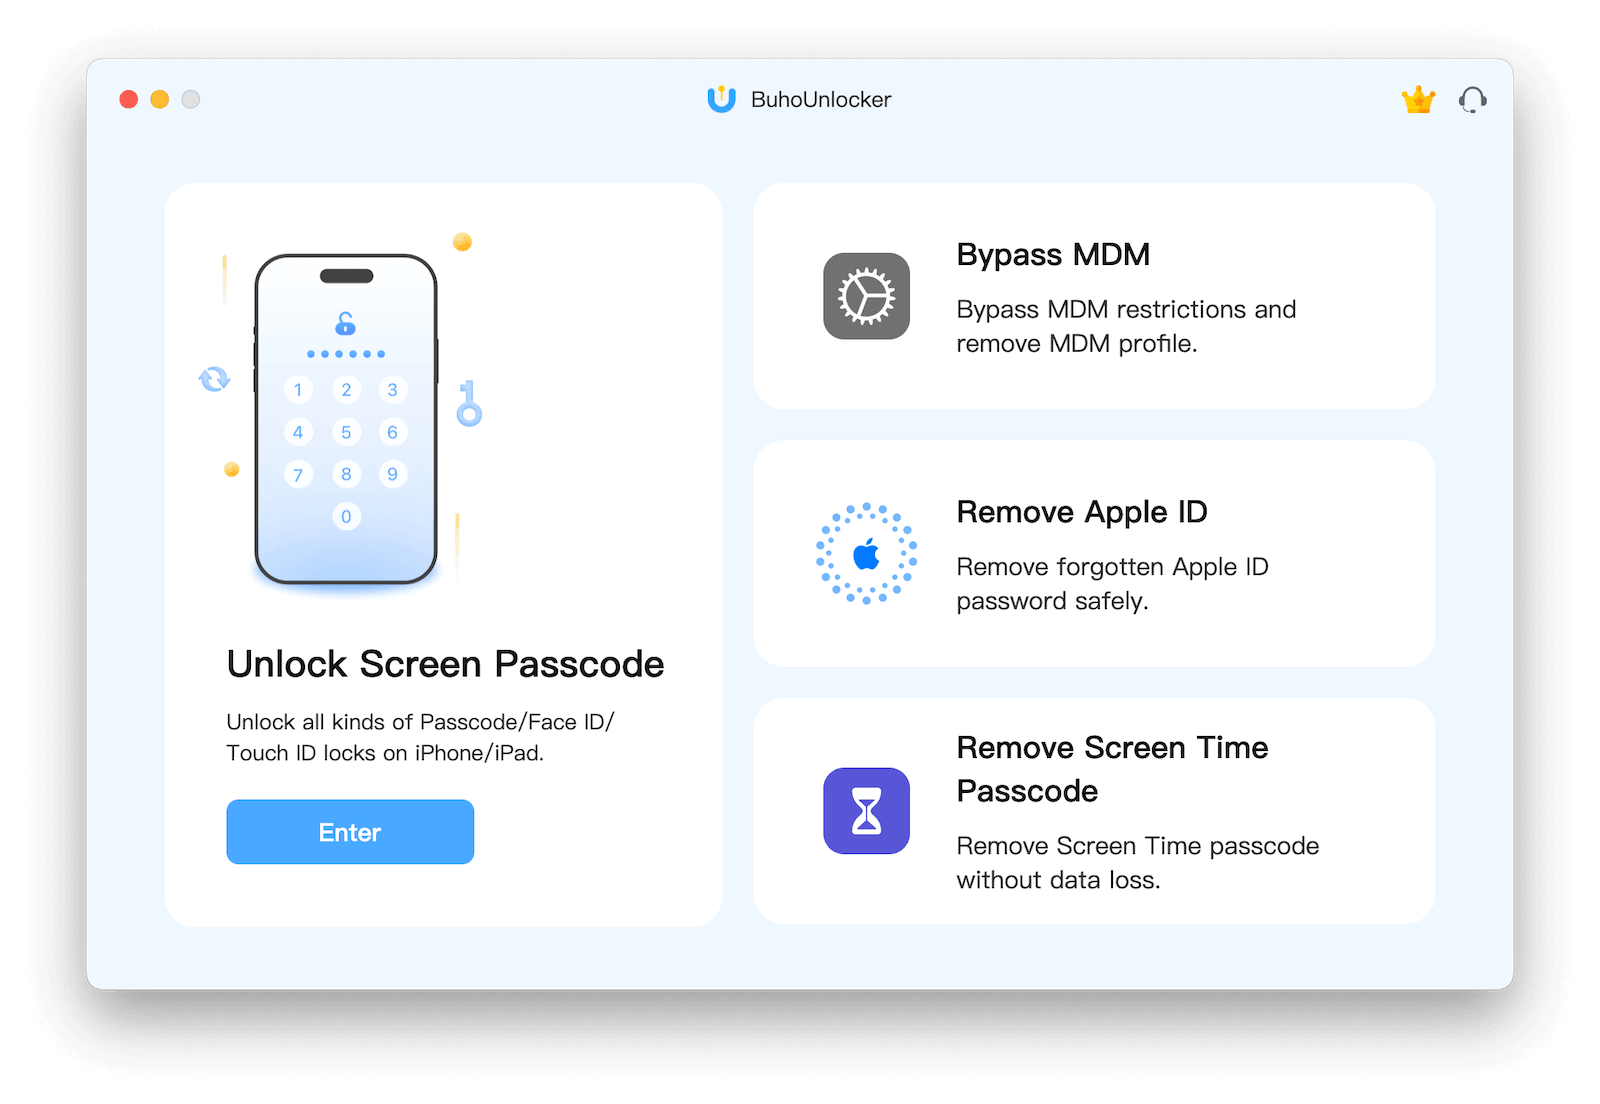 buhounlocker-unlock-sceen-passcode.png